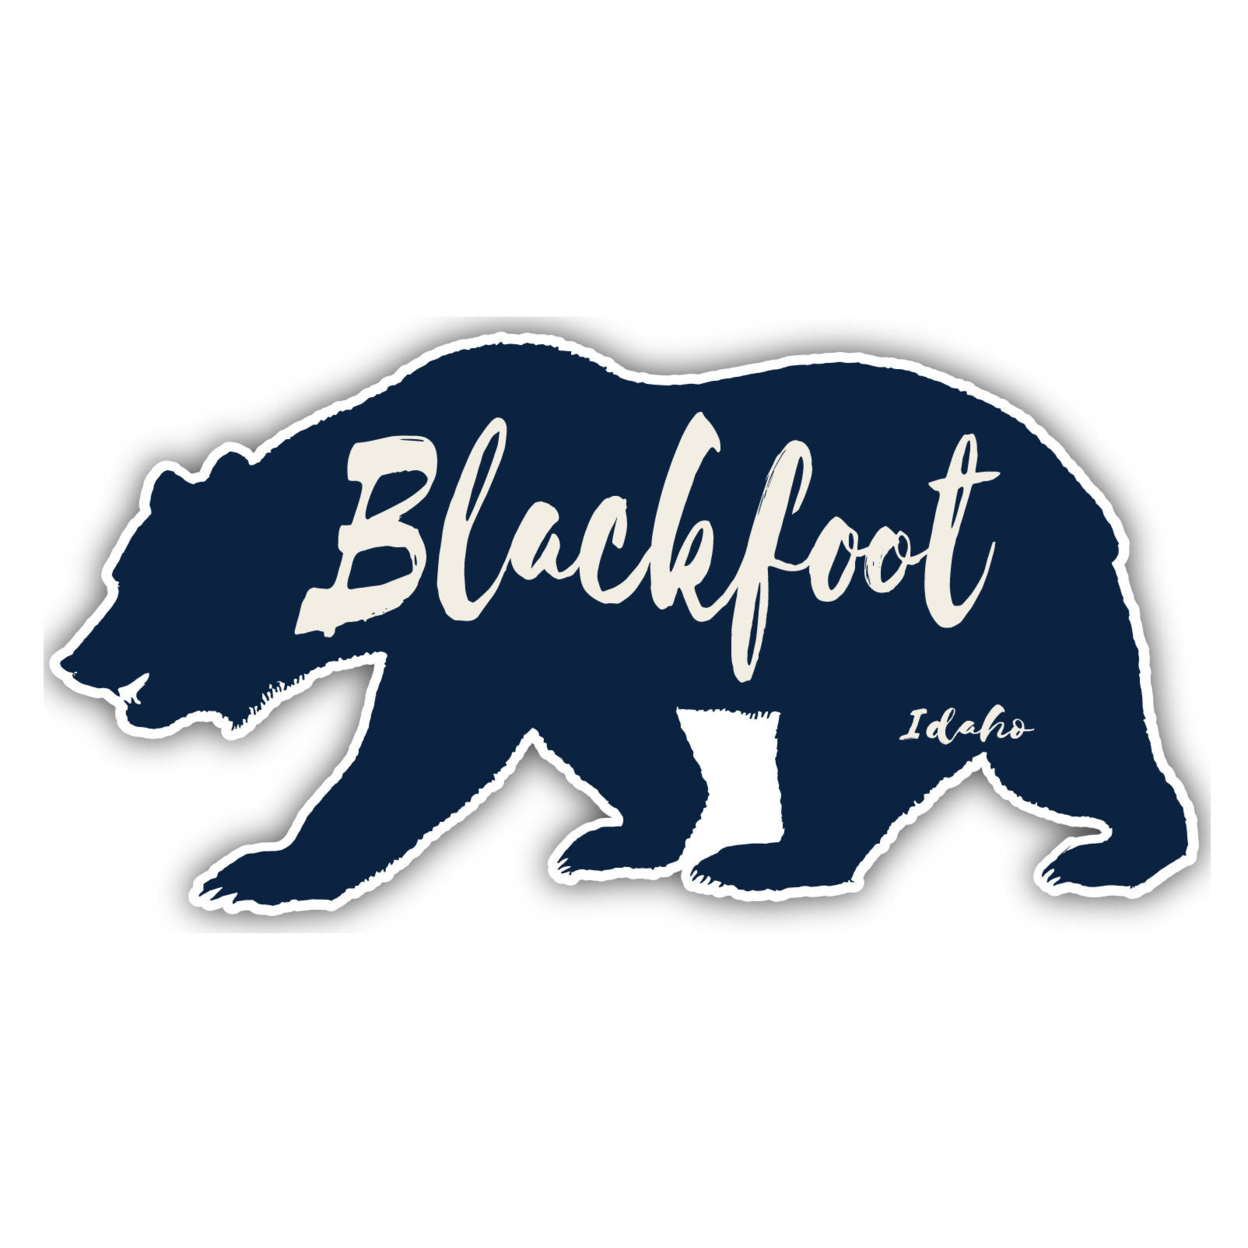 Blackfoot Idaho Souvenir Decorative Stickers (Choose Theme And Size) - Single Unit, 6-Inch, Camp Life